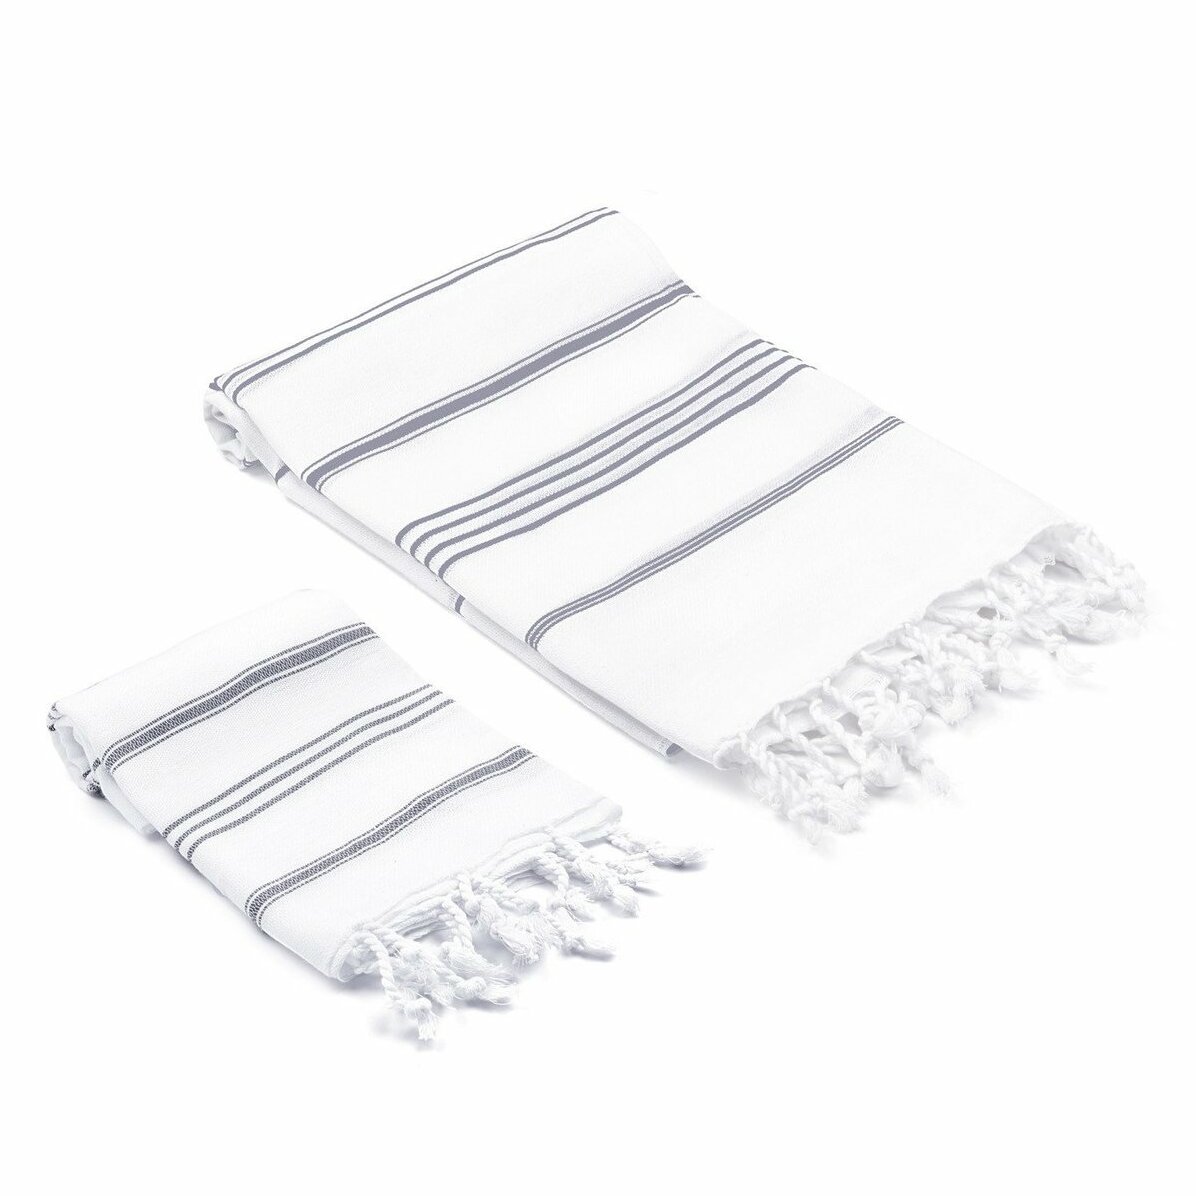 Abbie Organic Cotton Black and White Hand Towel + Reviews